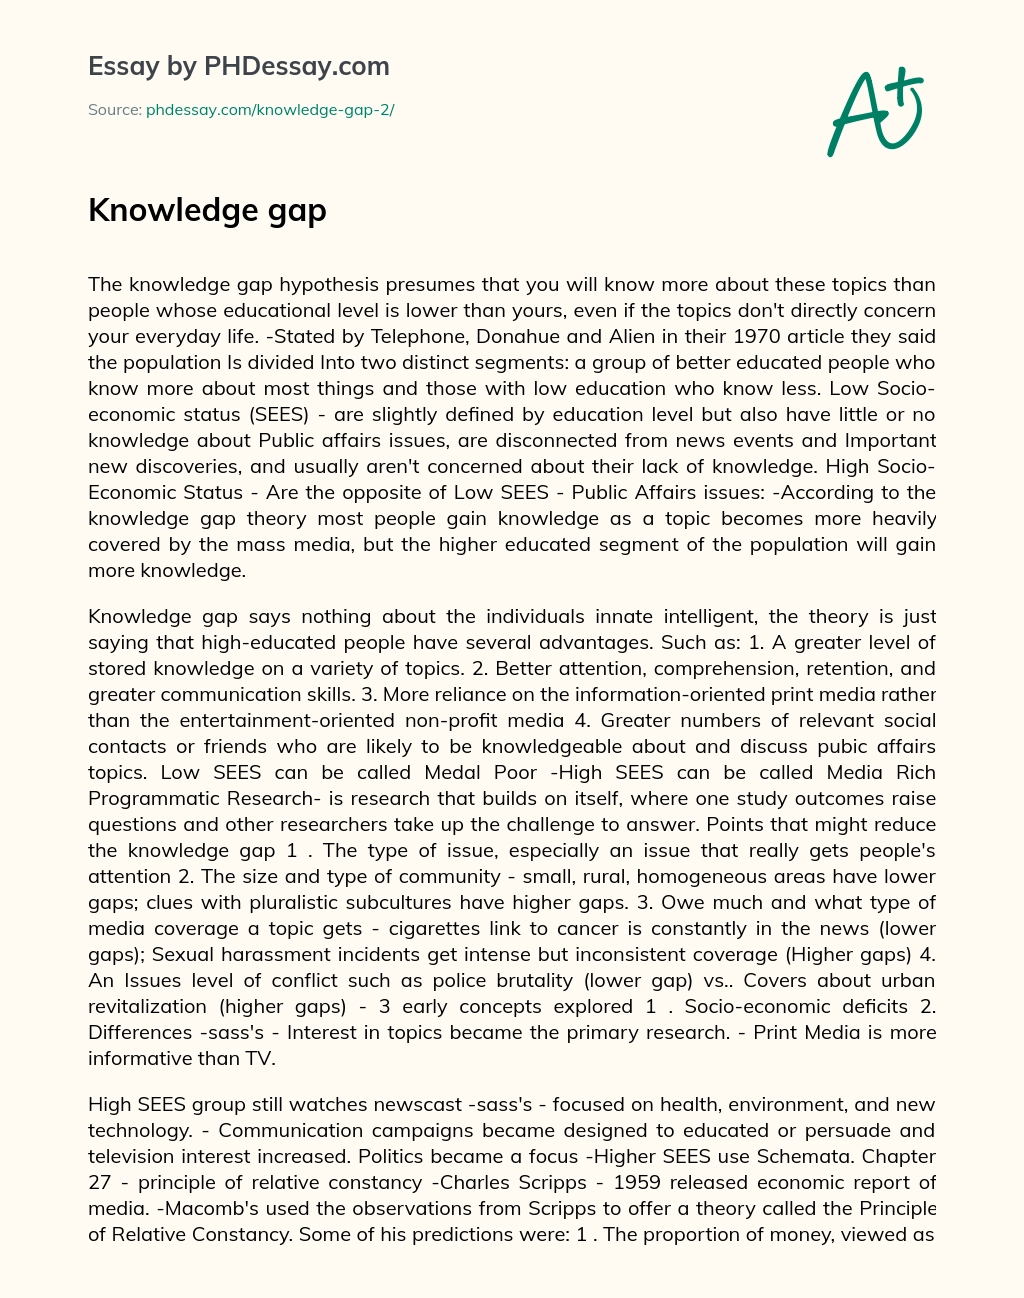 phd thesis knowledge gap